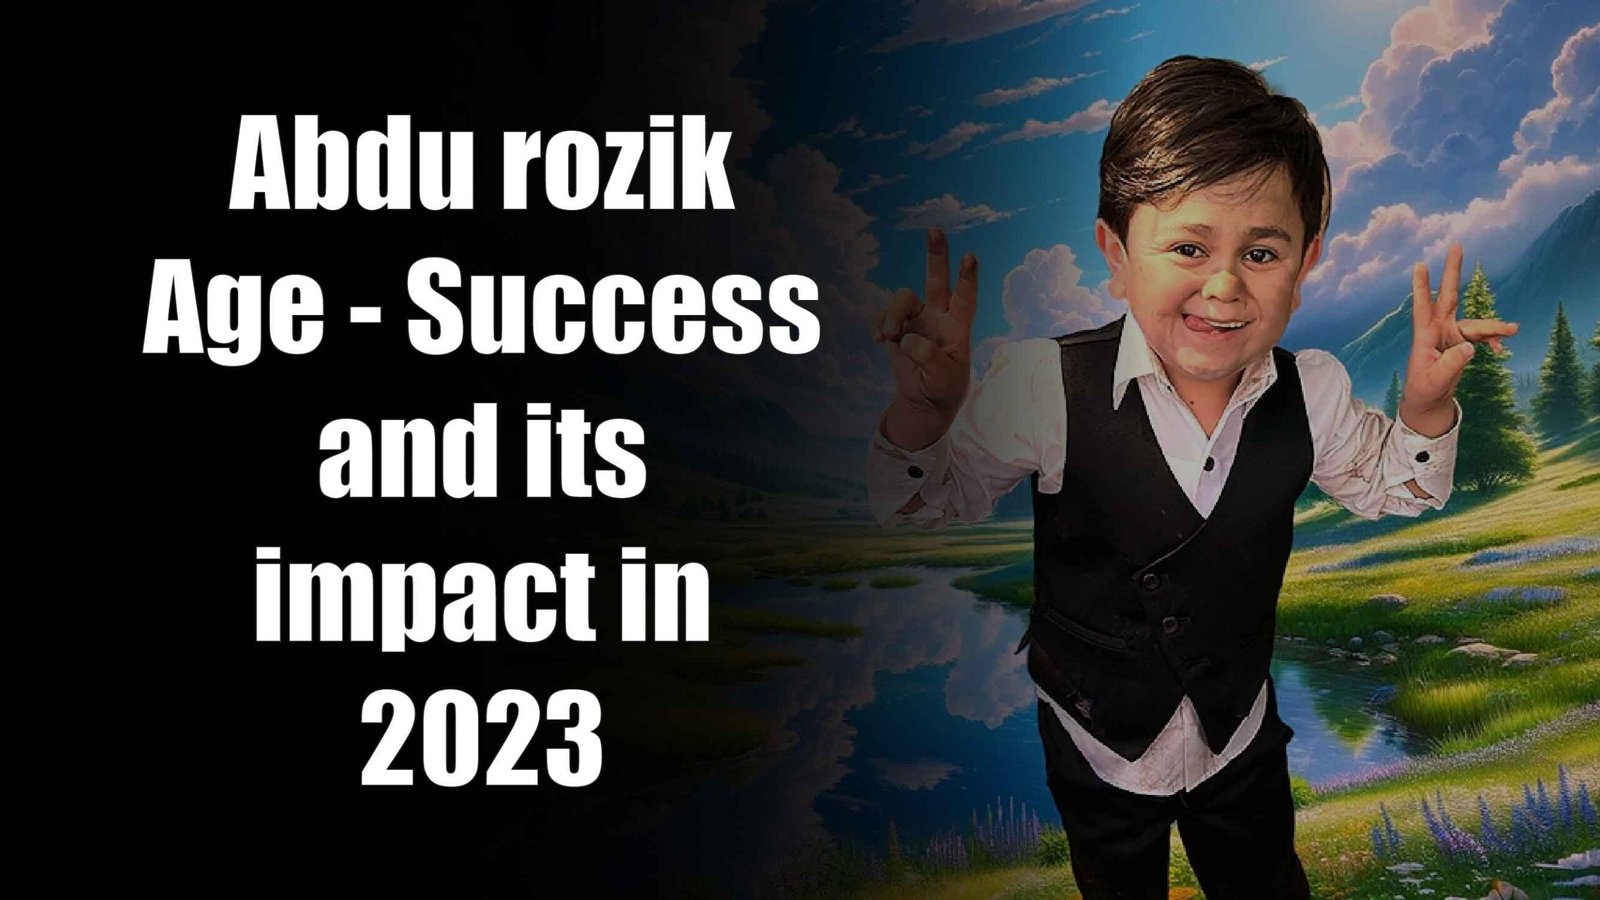 Abdu rozik Age - Success and its impact in 2023